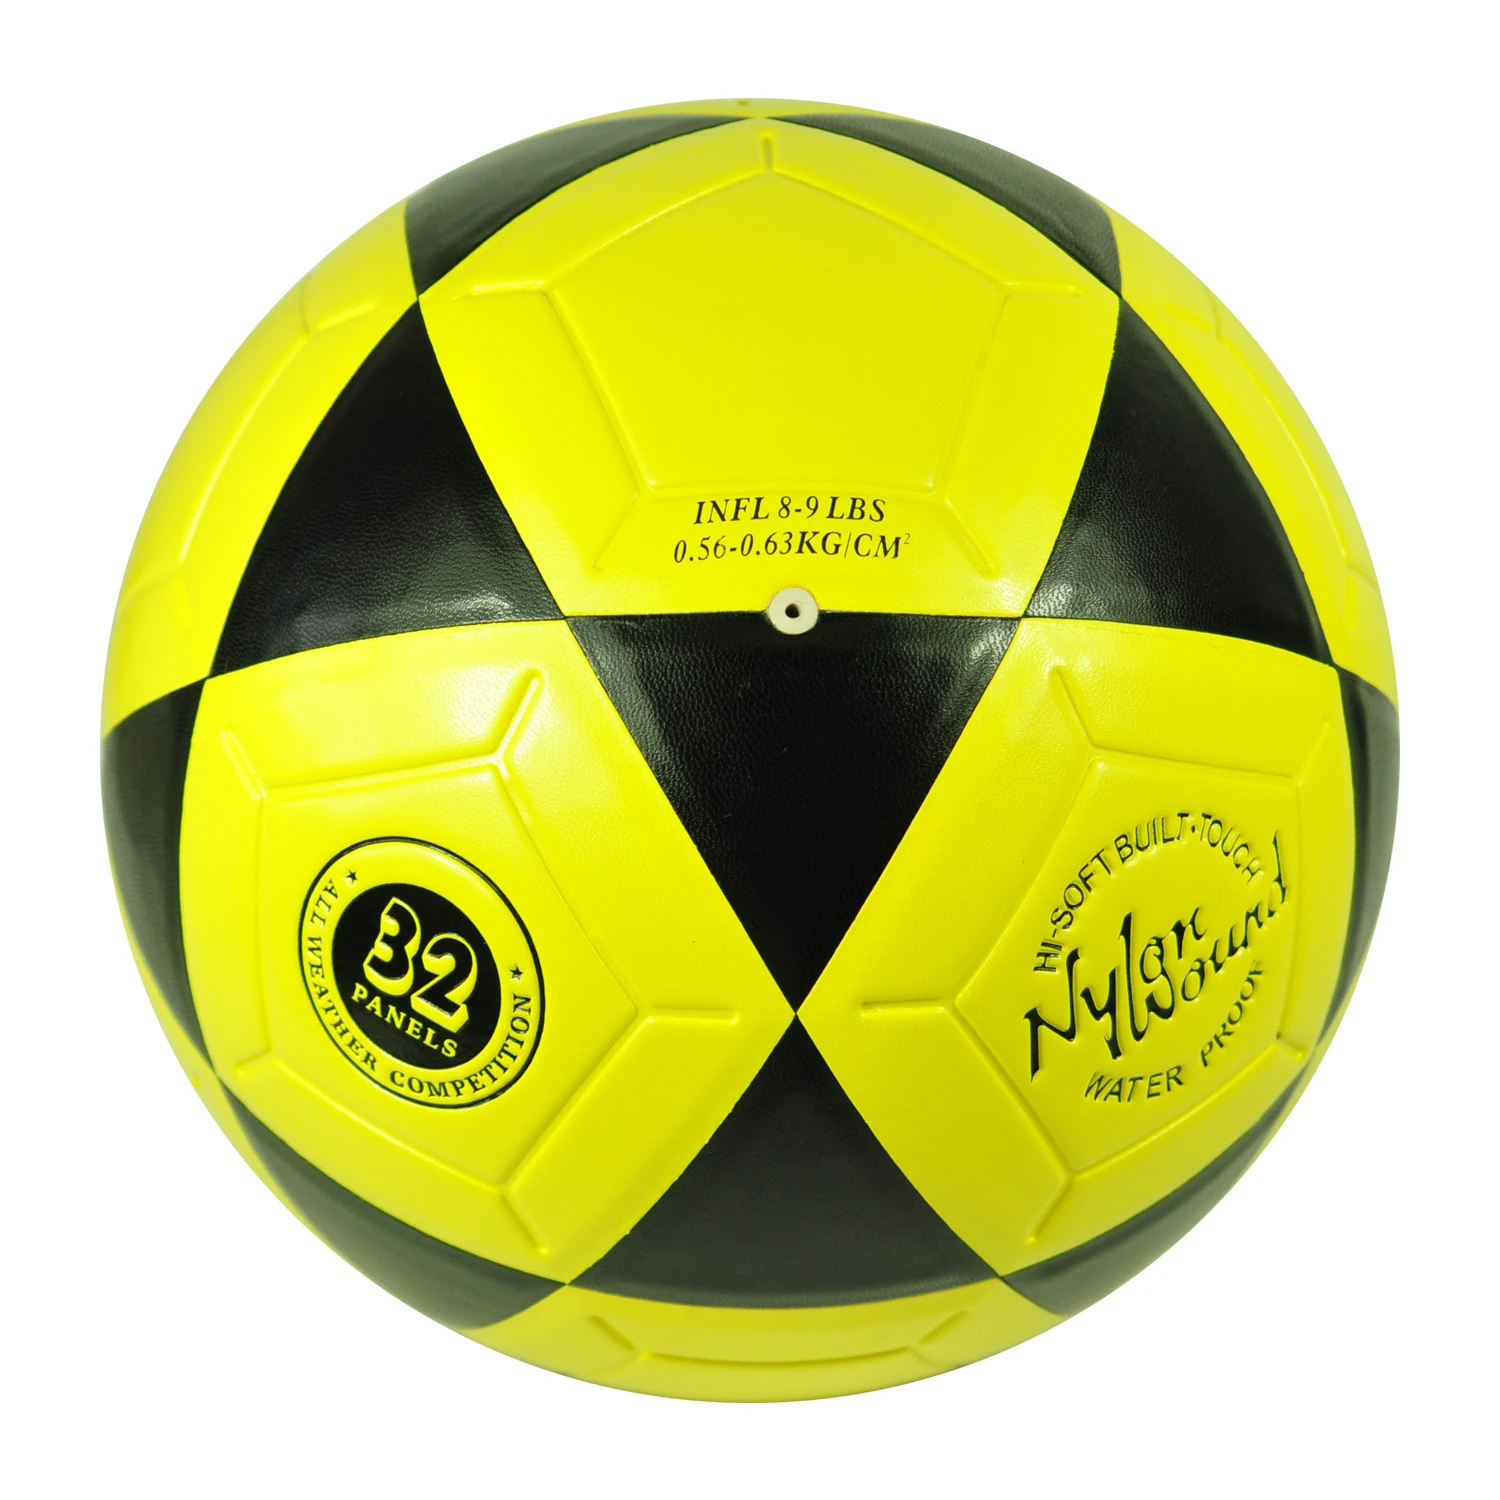 PU material no stitch High quality glue Hand laminated soccer ballsfootball making machine size 5 soccer ball